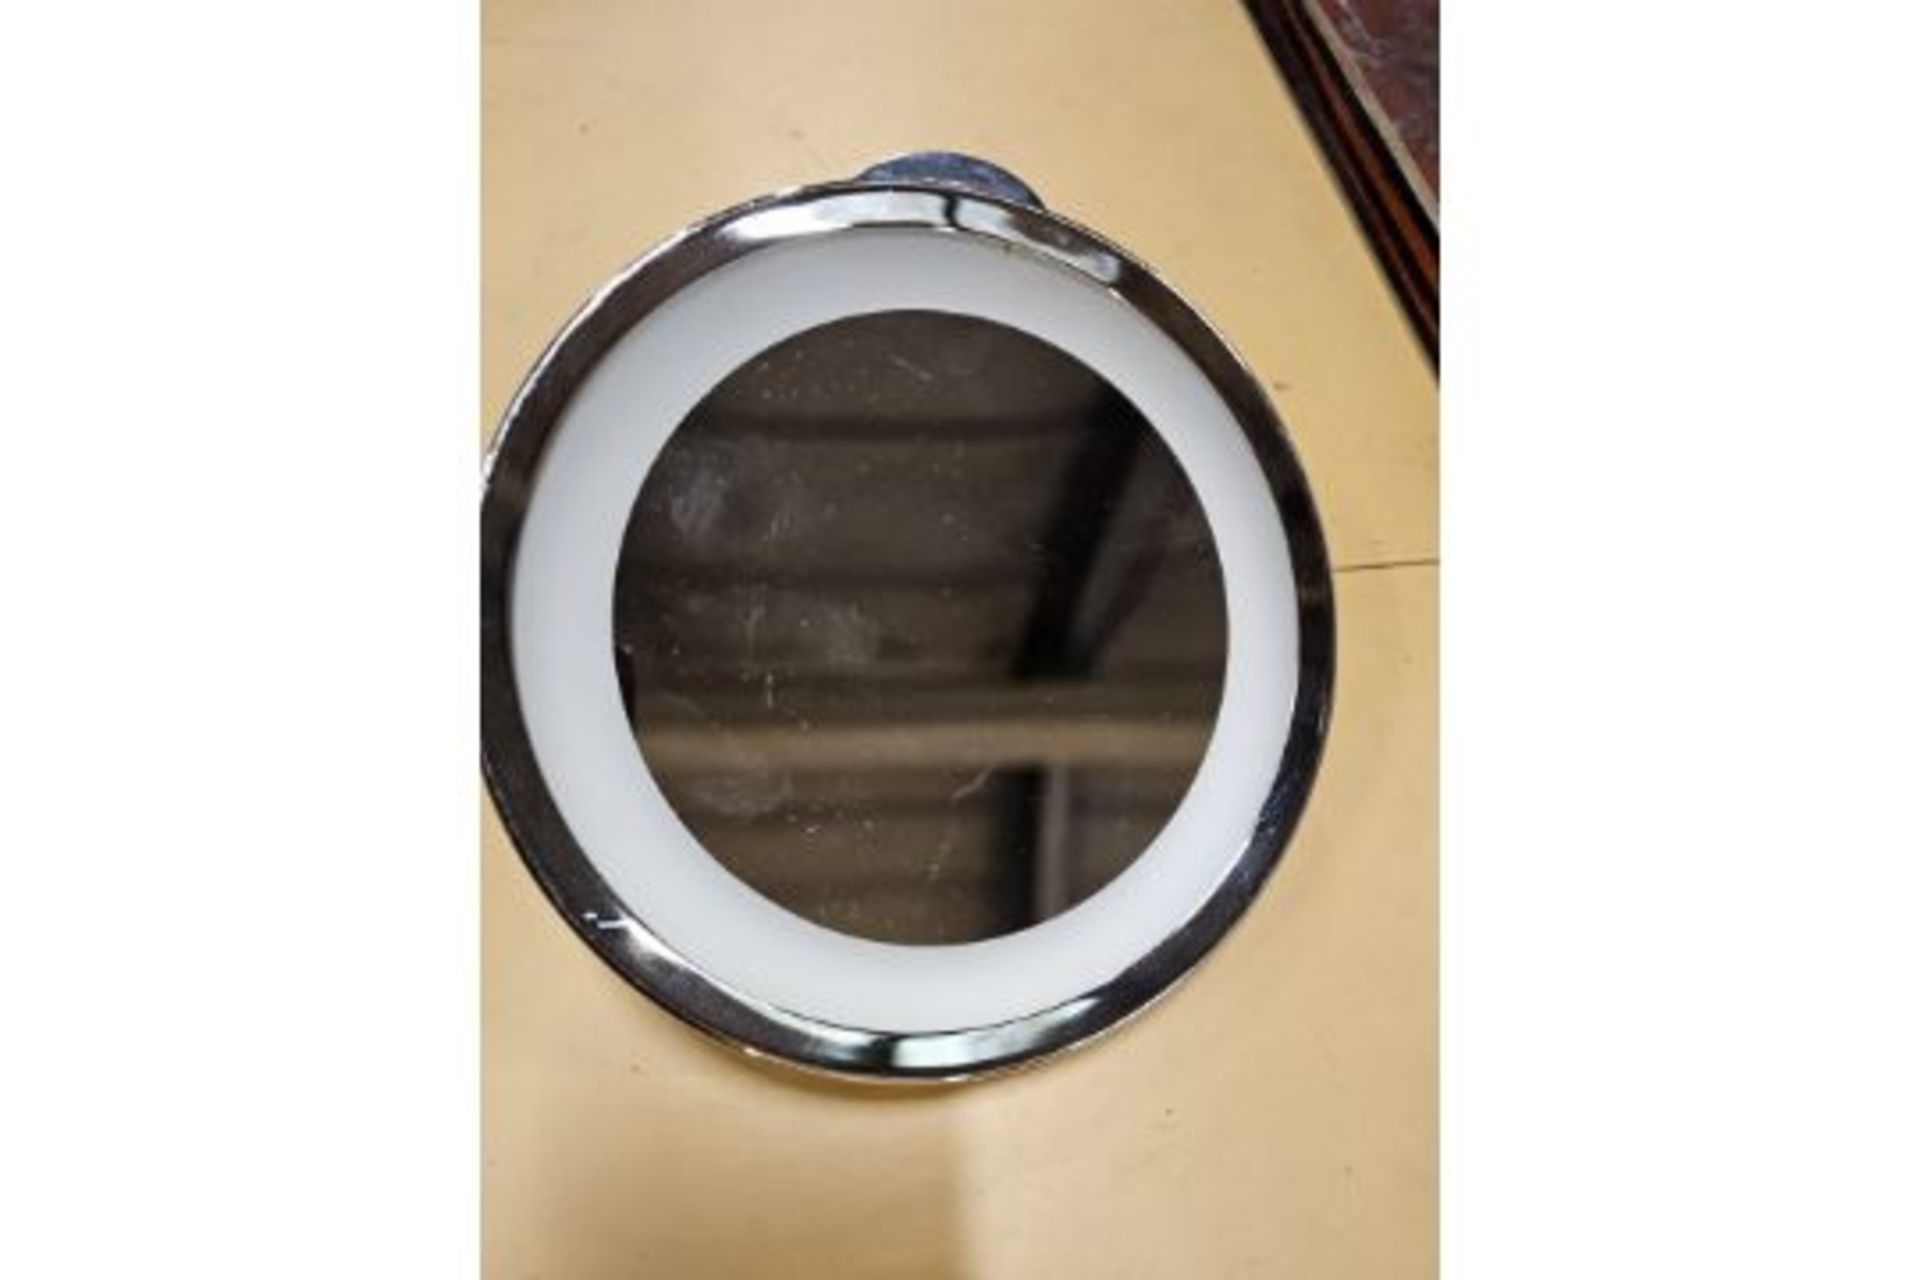 Led Illuminated Magnifying Vanity Mirror For Bathroom Round Ingress Protection Rating Ip44 - Image 3 of 3